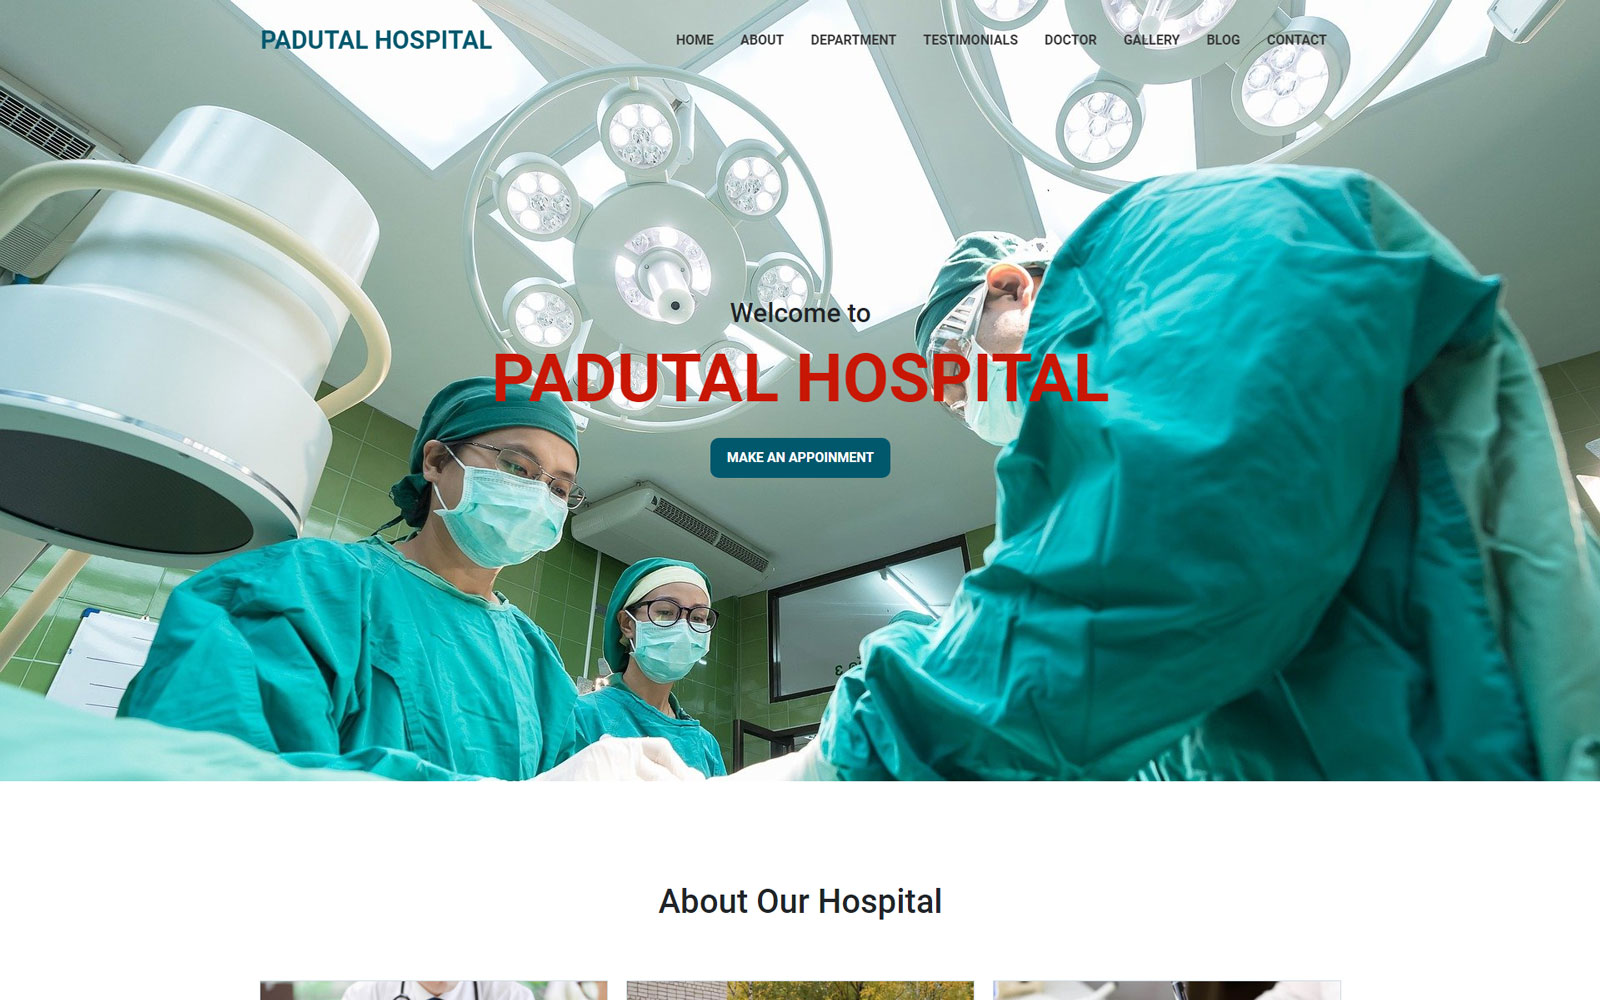 Padutal Hospital - Hospital Landing Page Template